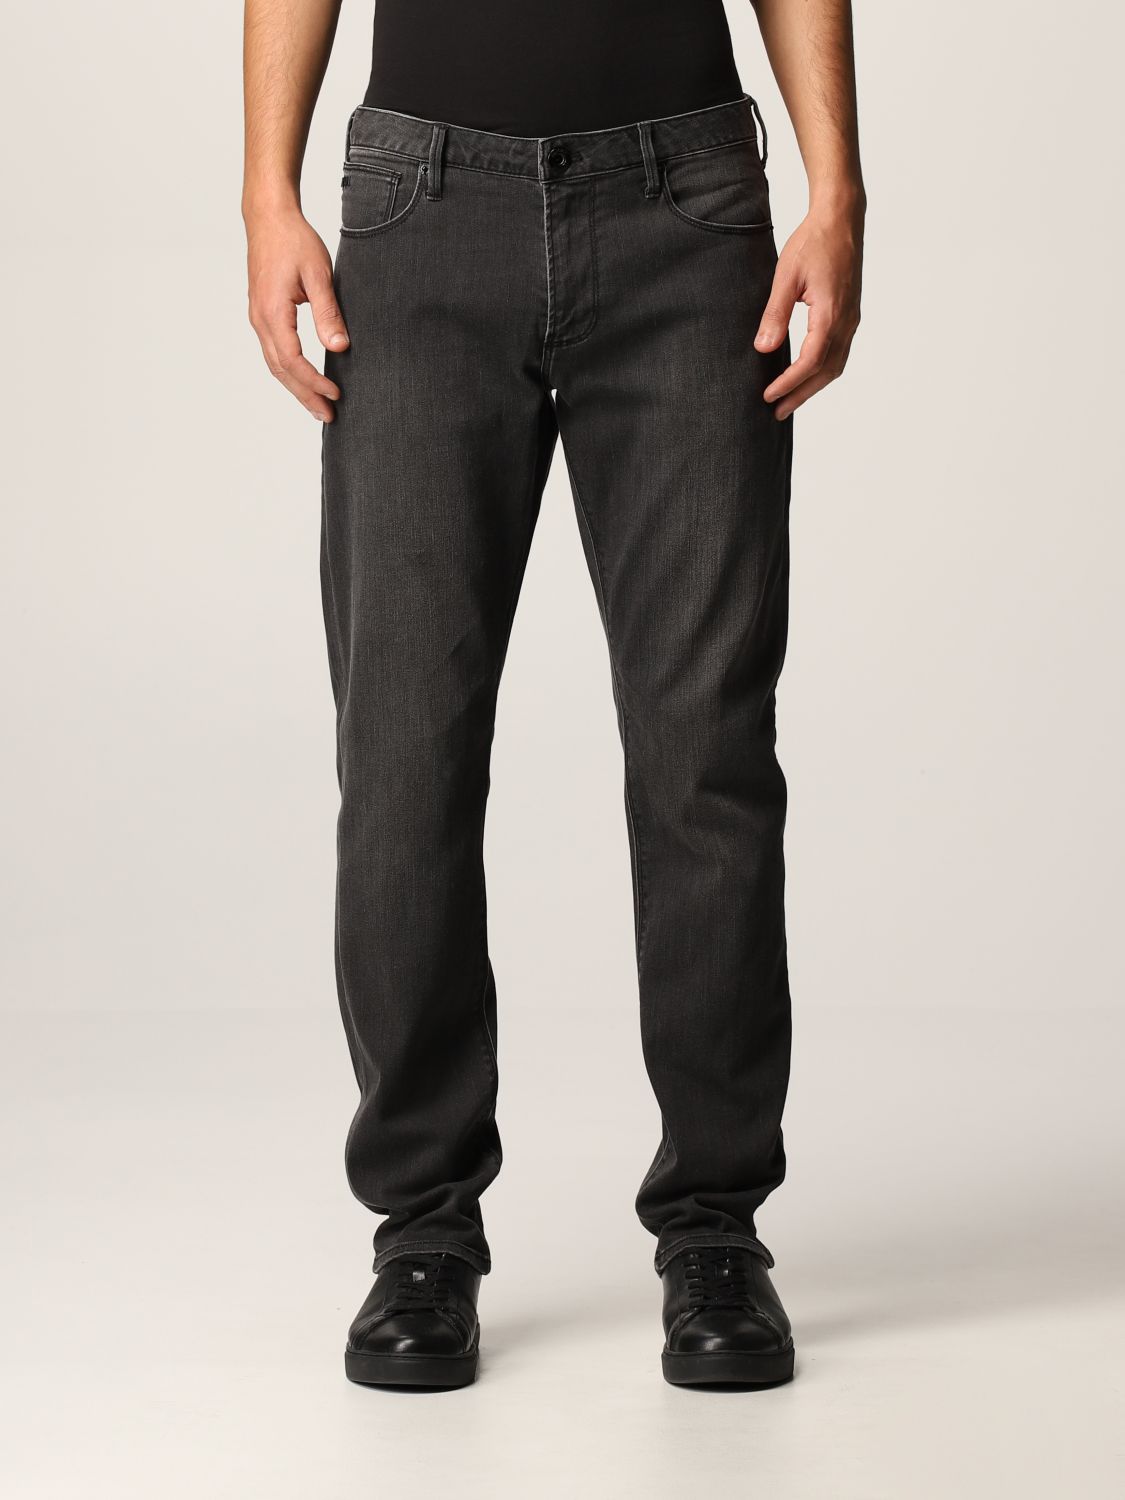 EMPORIO ARMANI: 5-pocket jeans - Denim | Emporio Armani jeans 6K1J06 ...